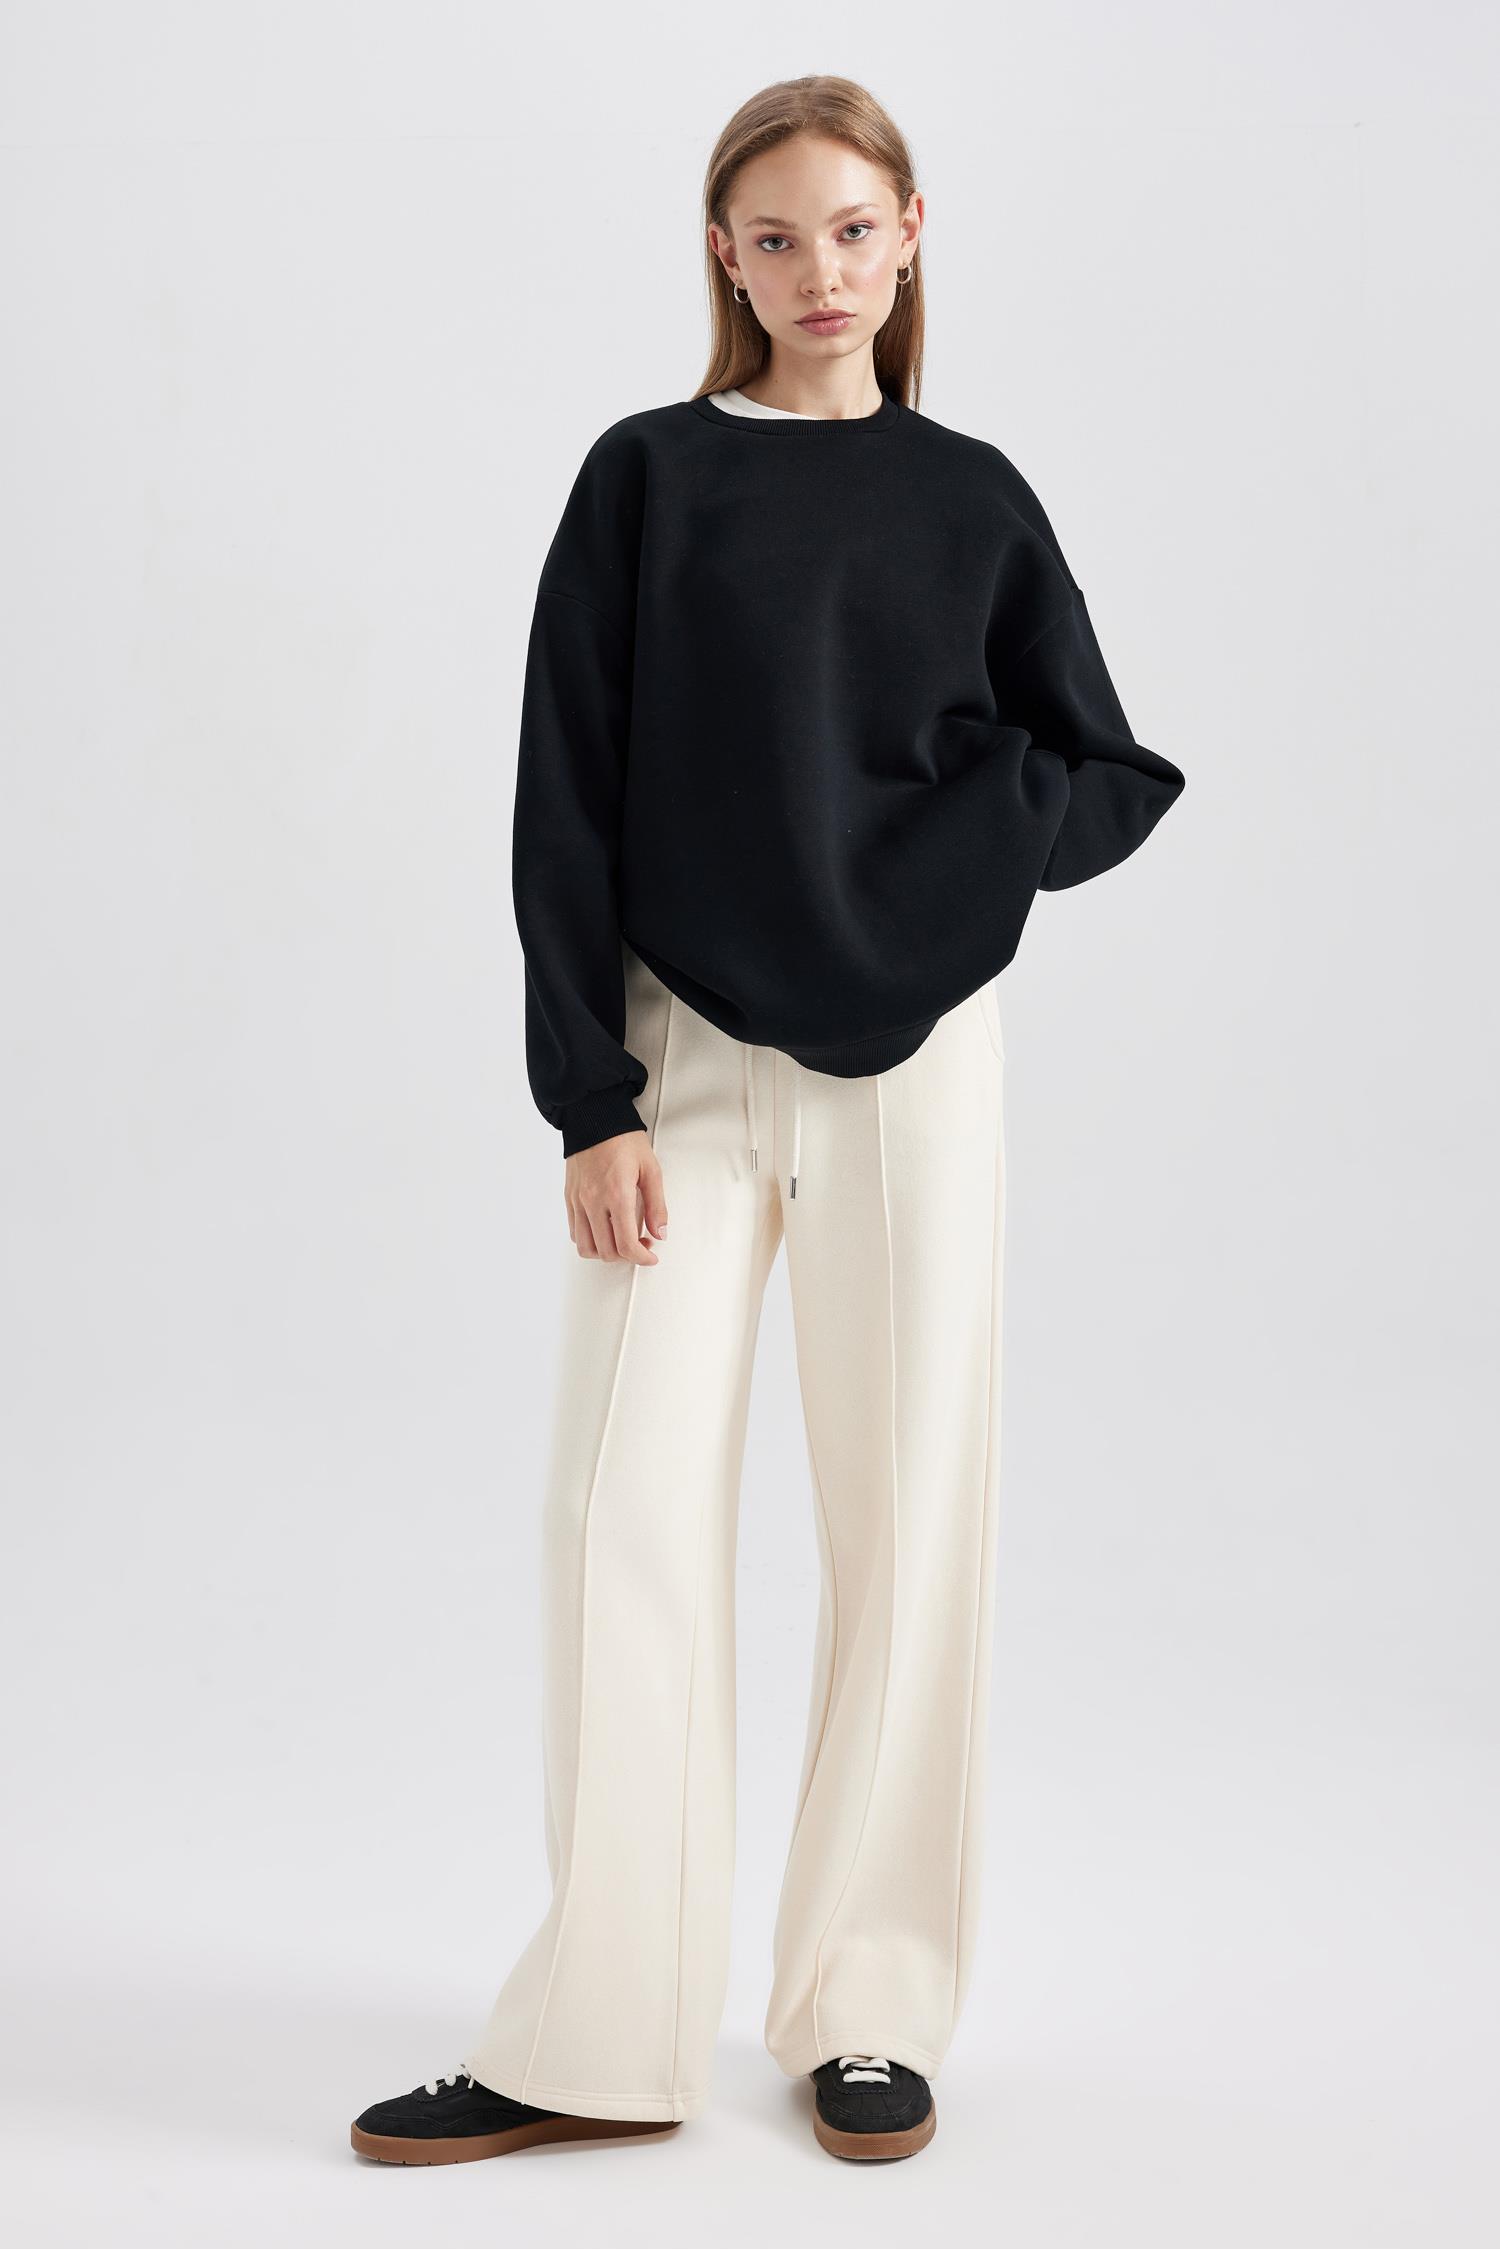 Black WOMAN Oversize Fit Long Sleeve Sweatshirt 2900700